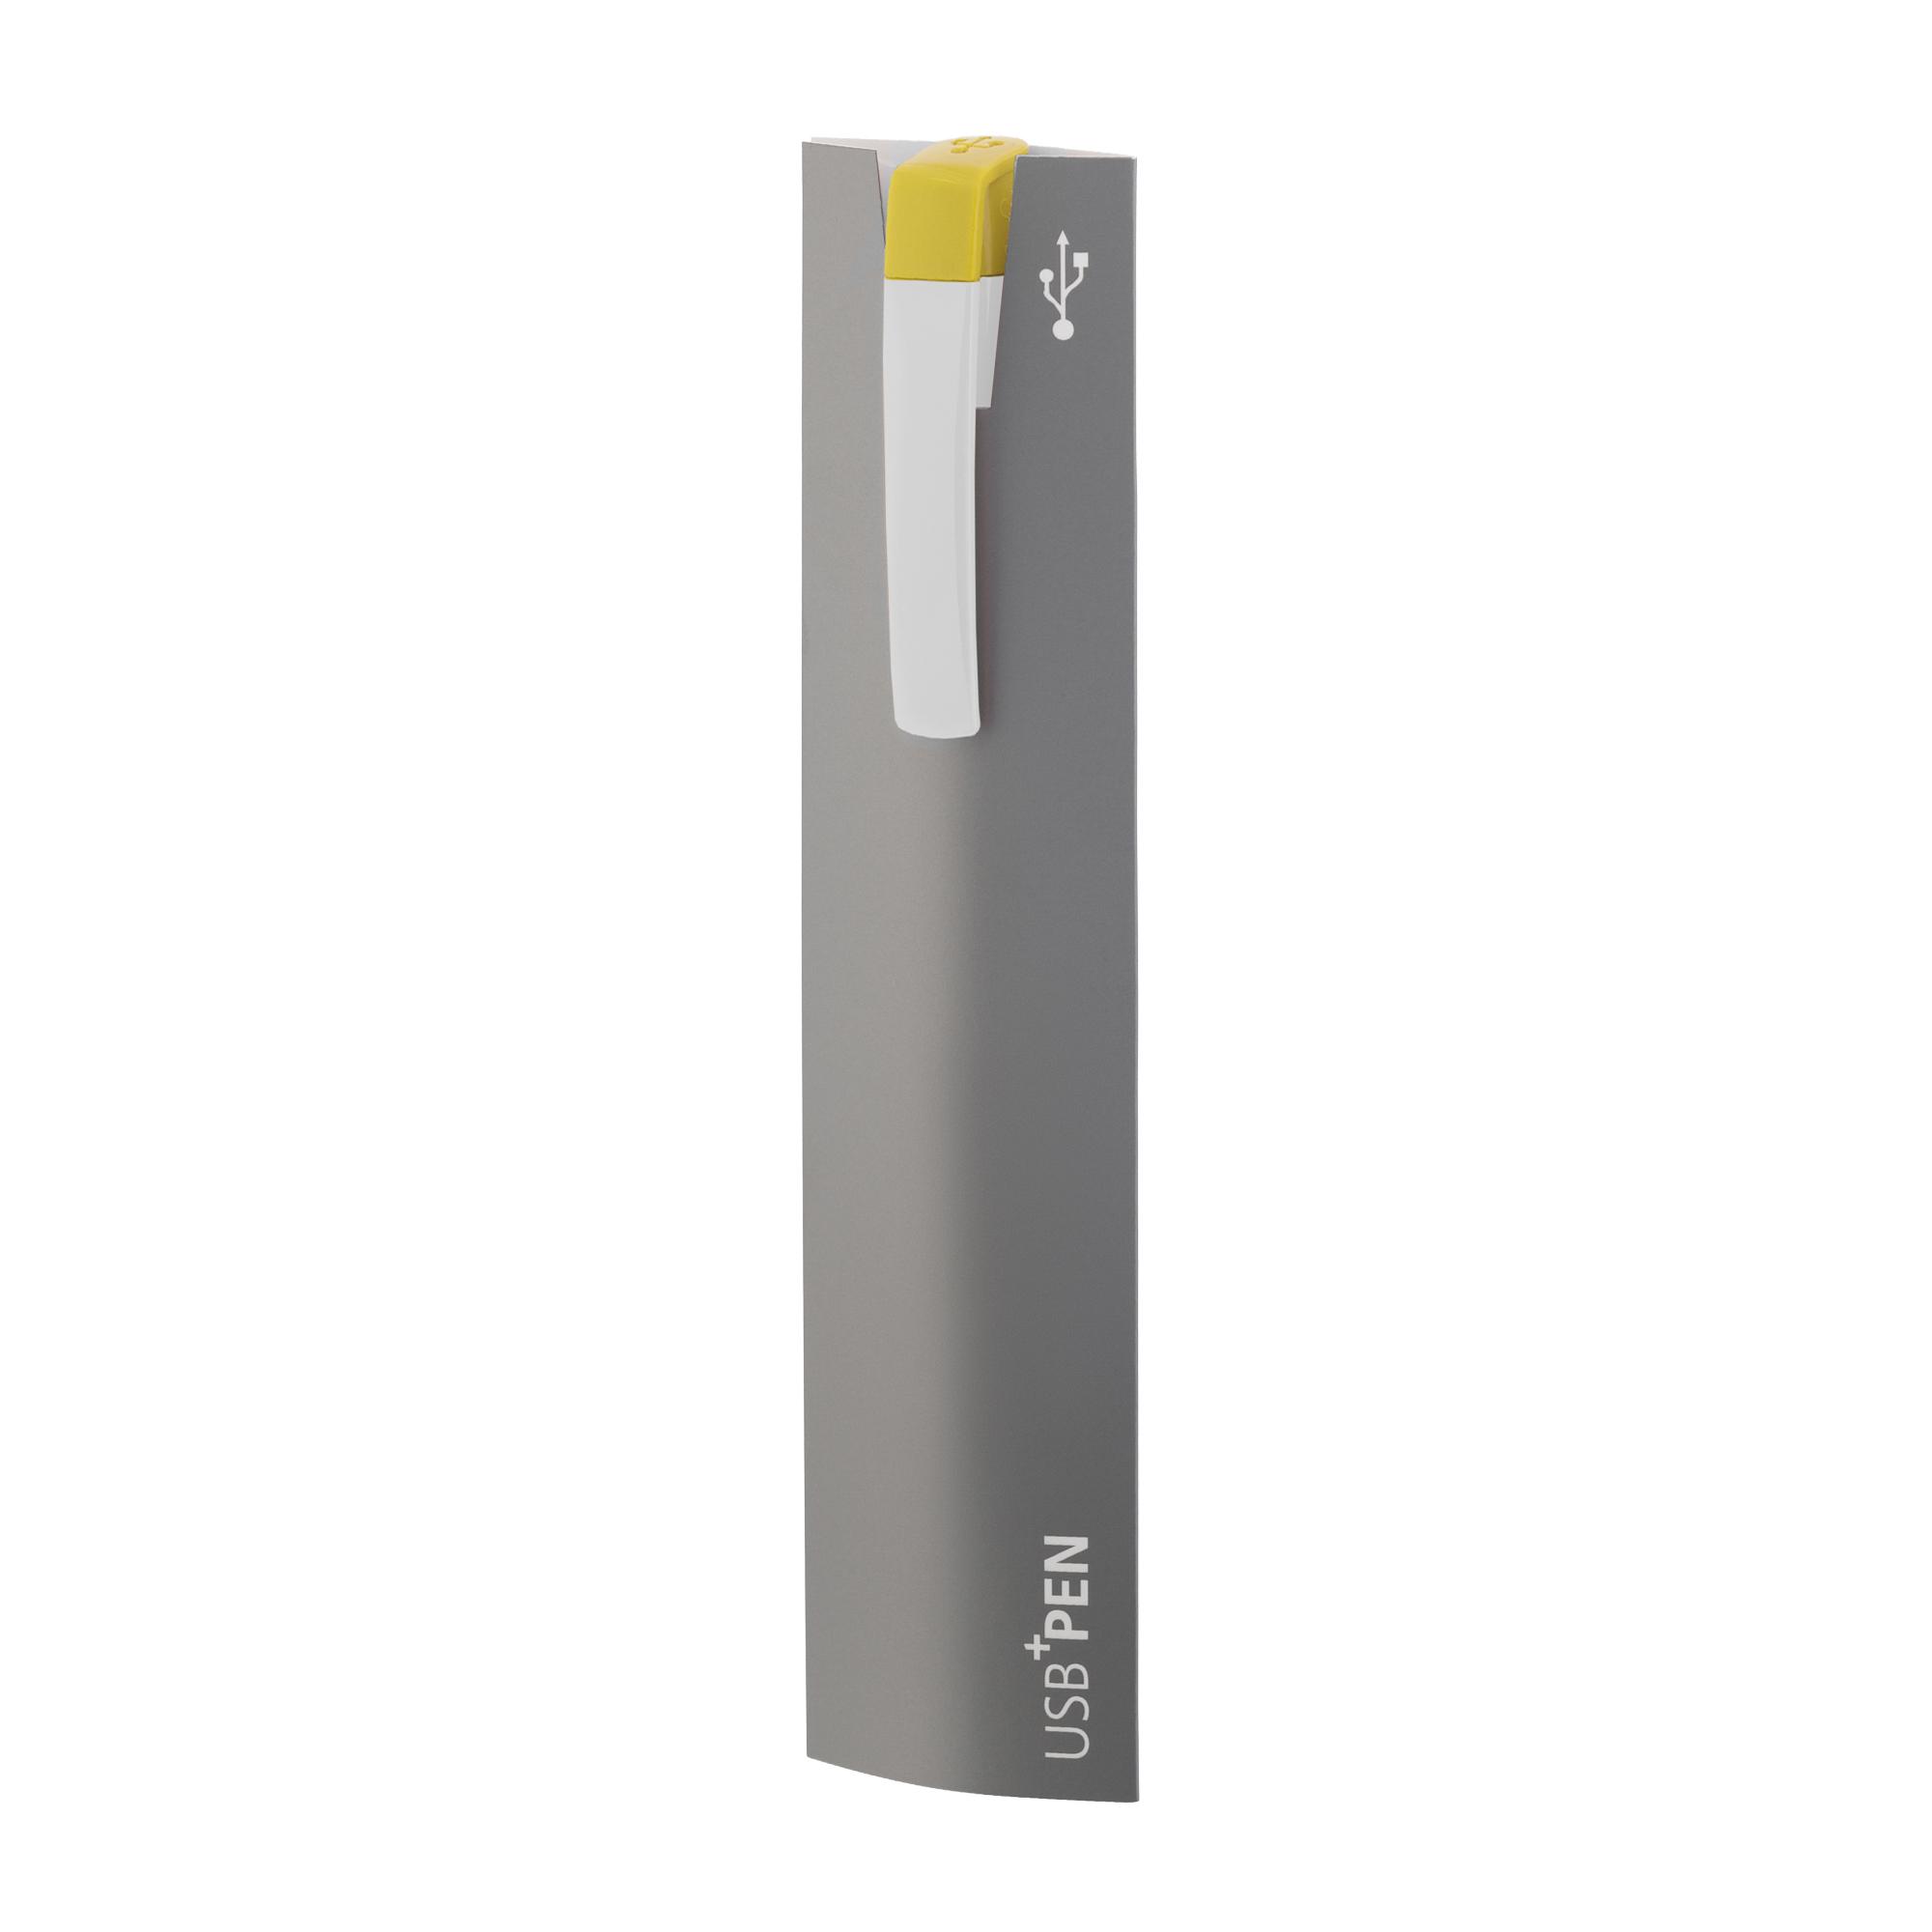 Ручка с флеш-картой USB 8GB «TURNUS M», цвет белый с желтым, фото 1